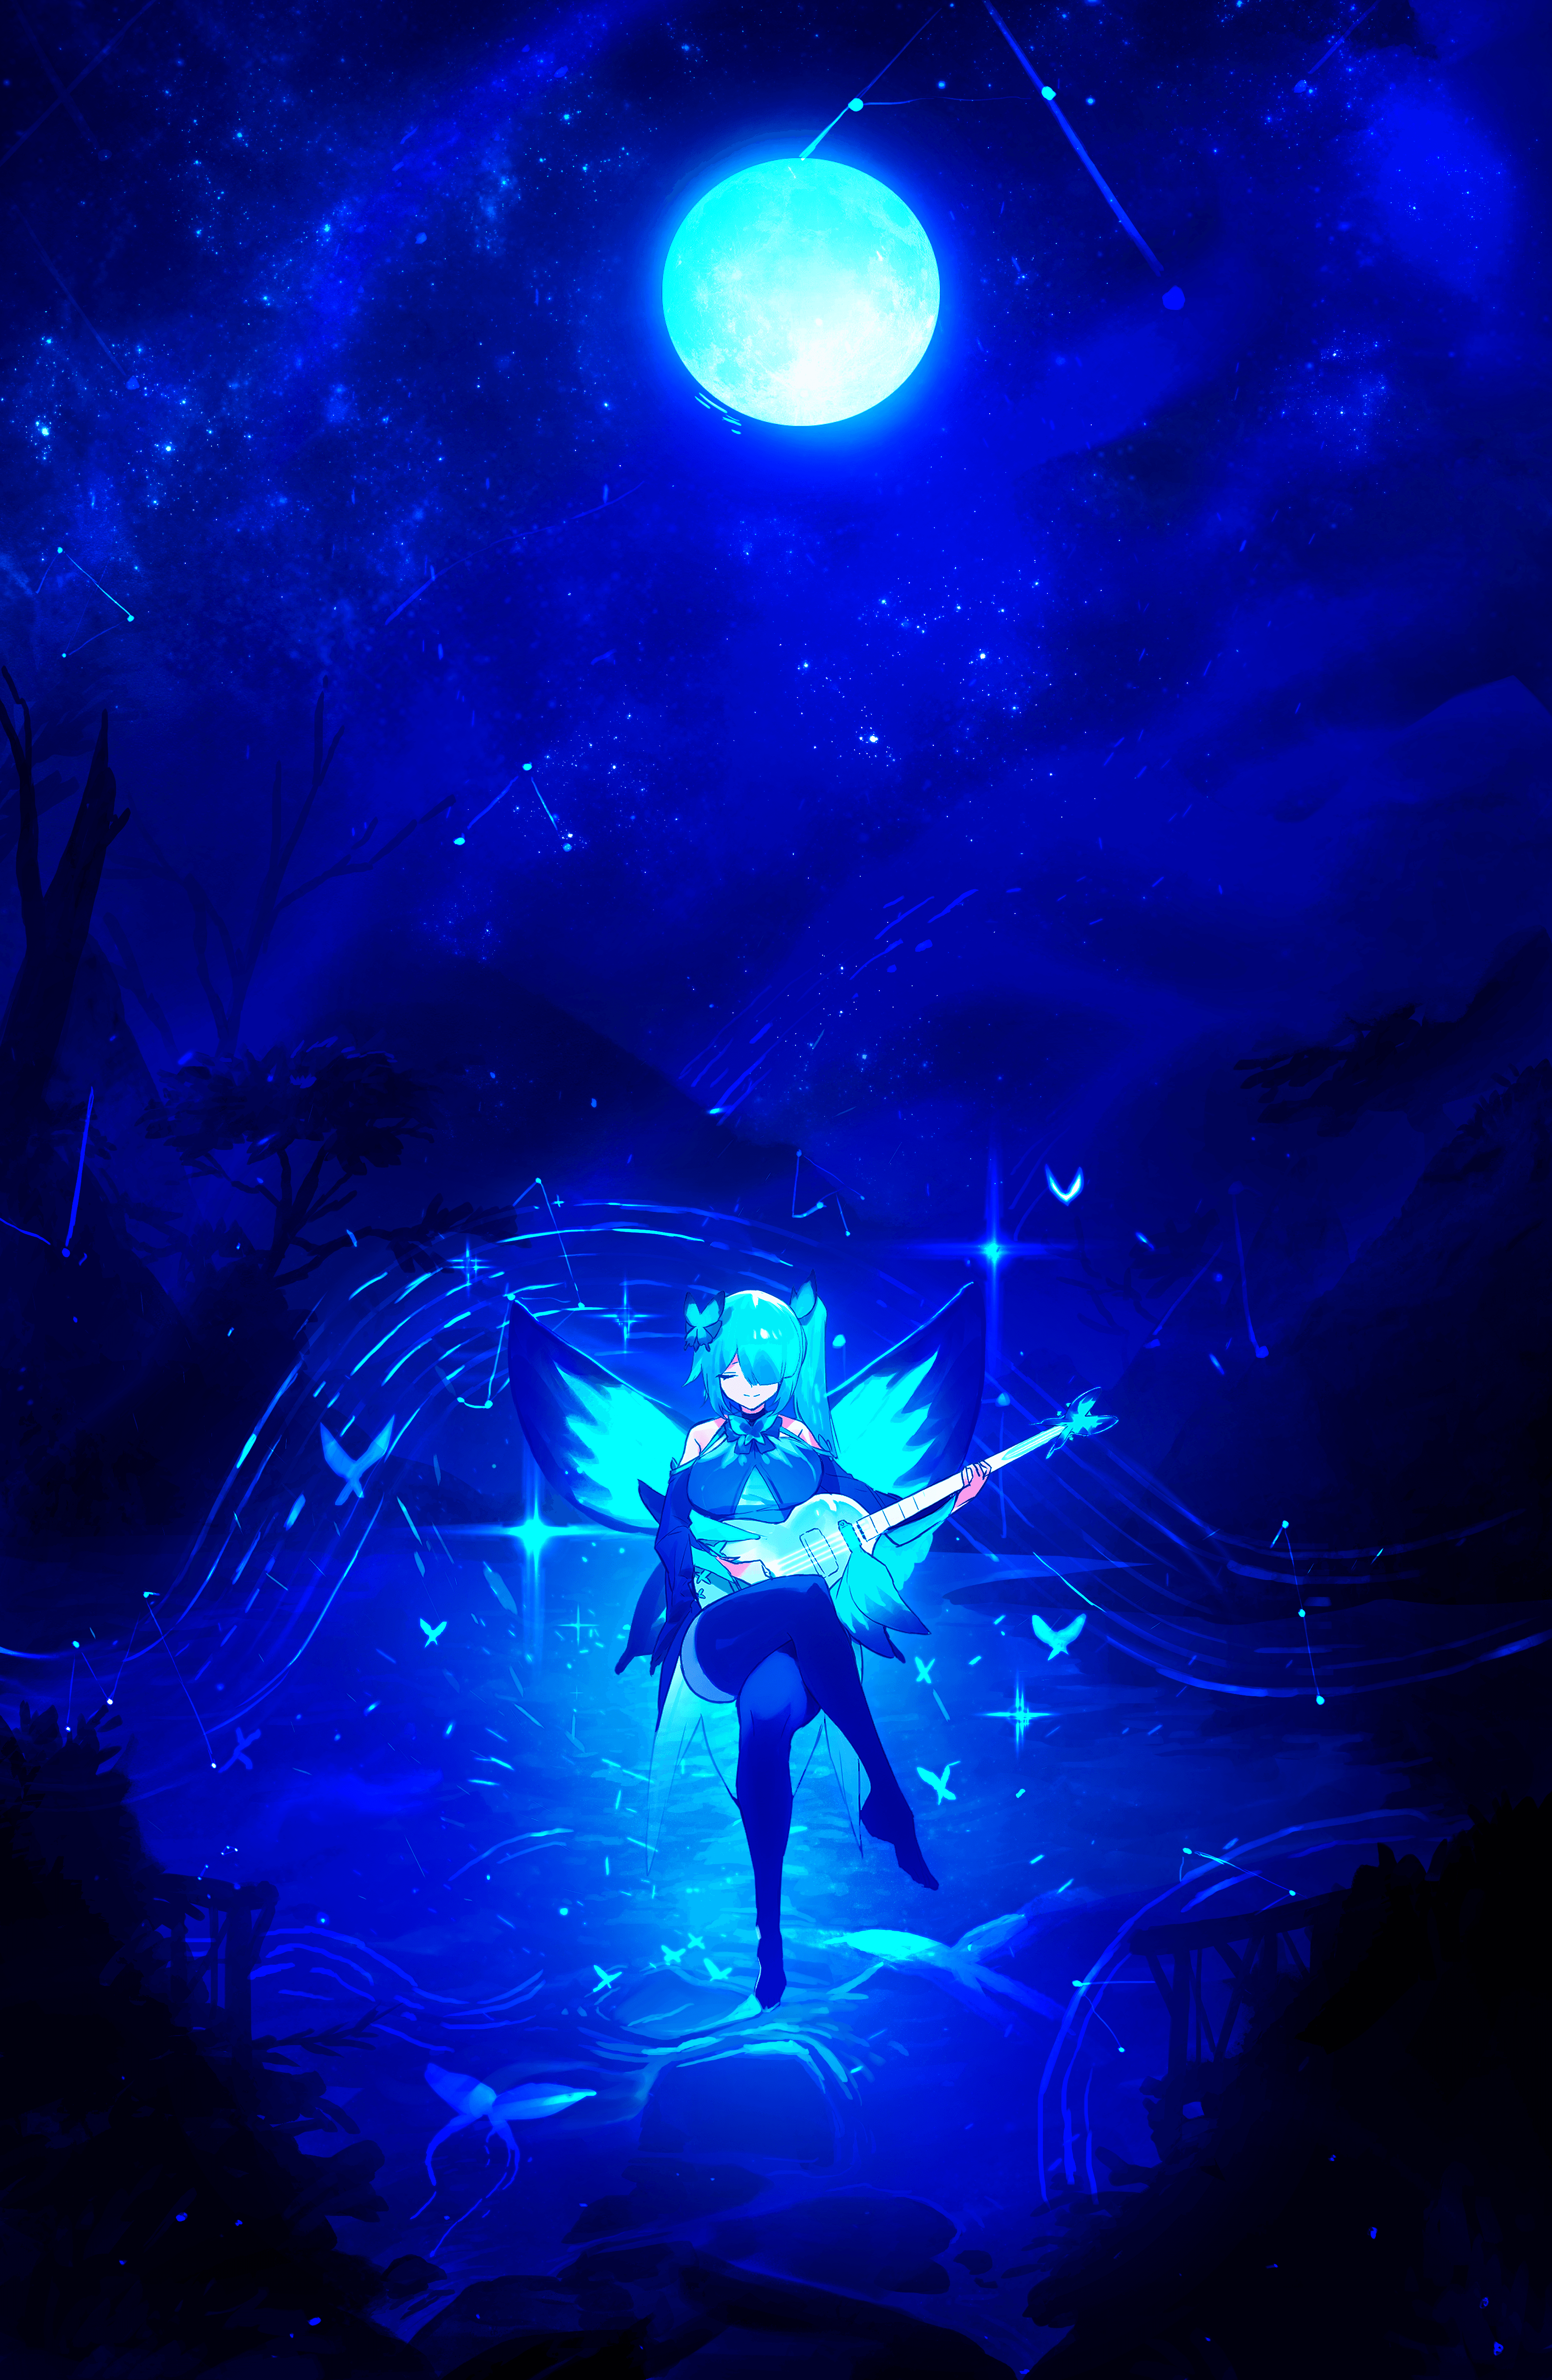 Fairy of the lake [Tsubaki]